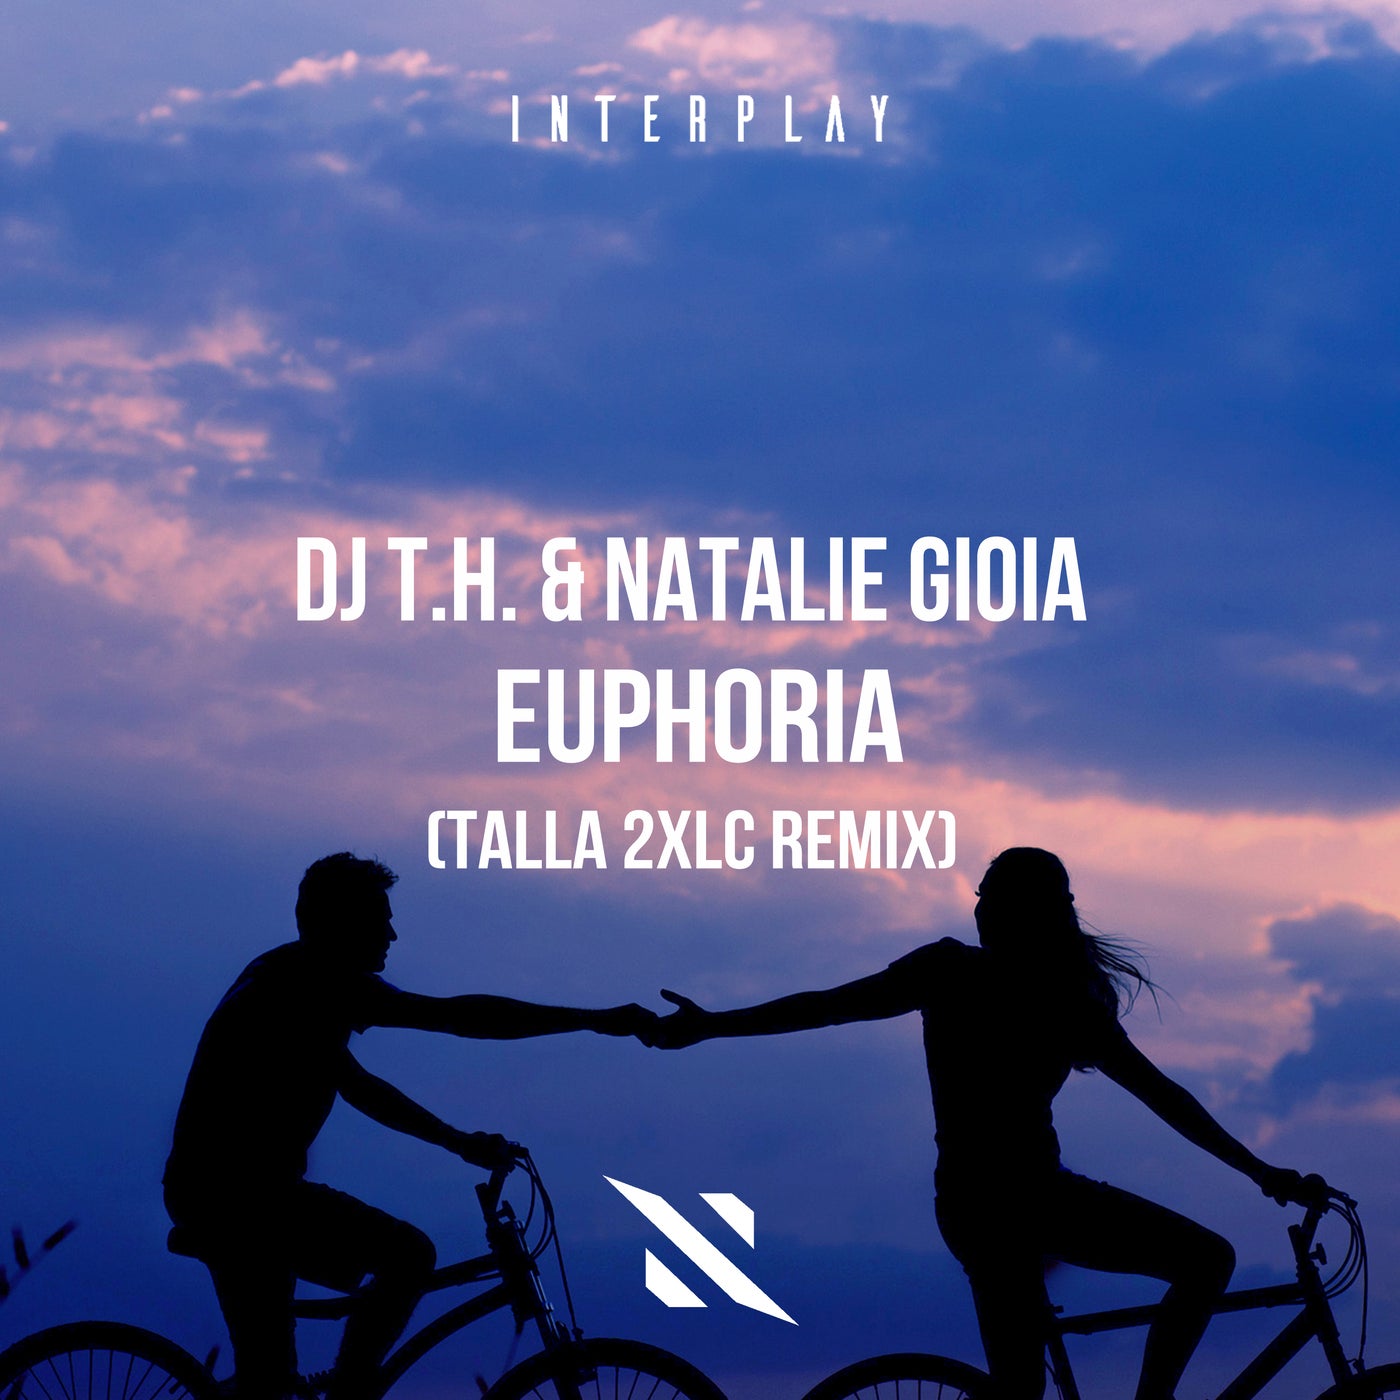 DJ T.h. & Natalie Gioia - Euphoria (Talla 2Xlc Extended Remix)